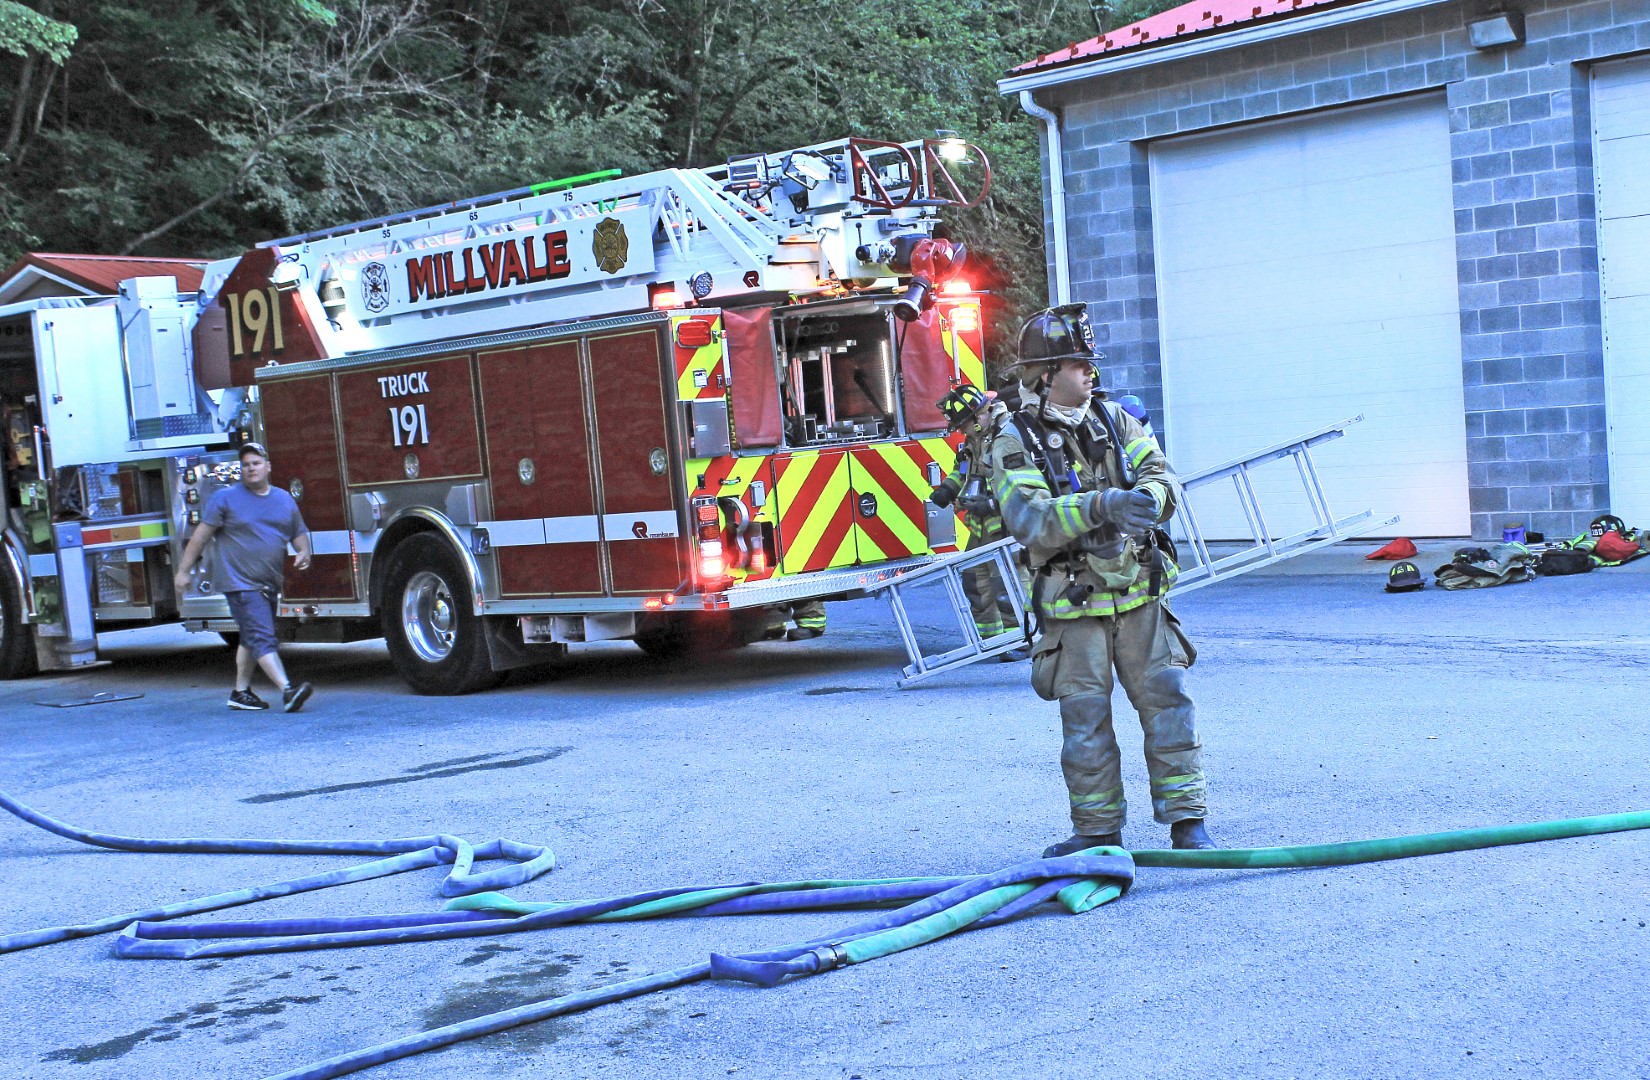 Millvale Volunteer Fire Department (Station 191)